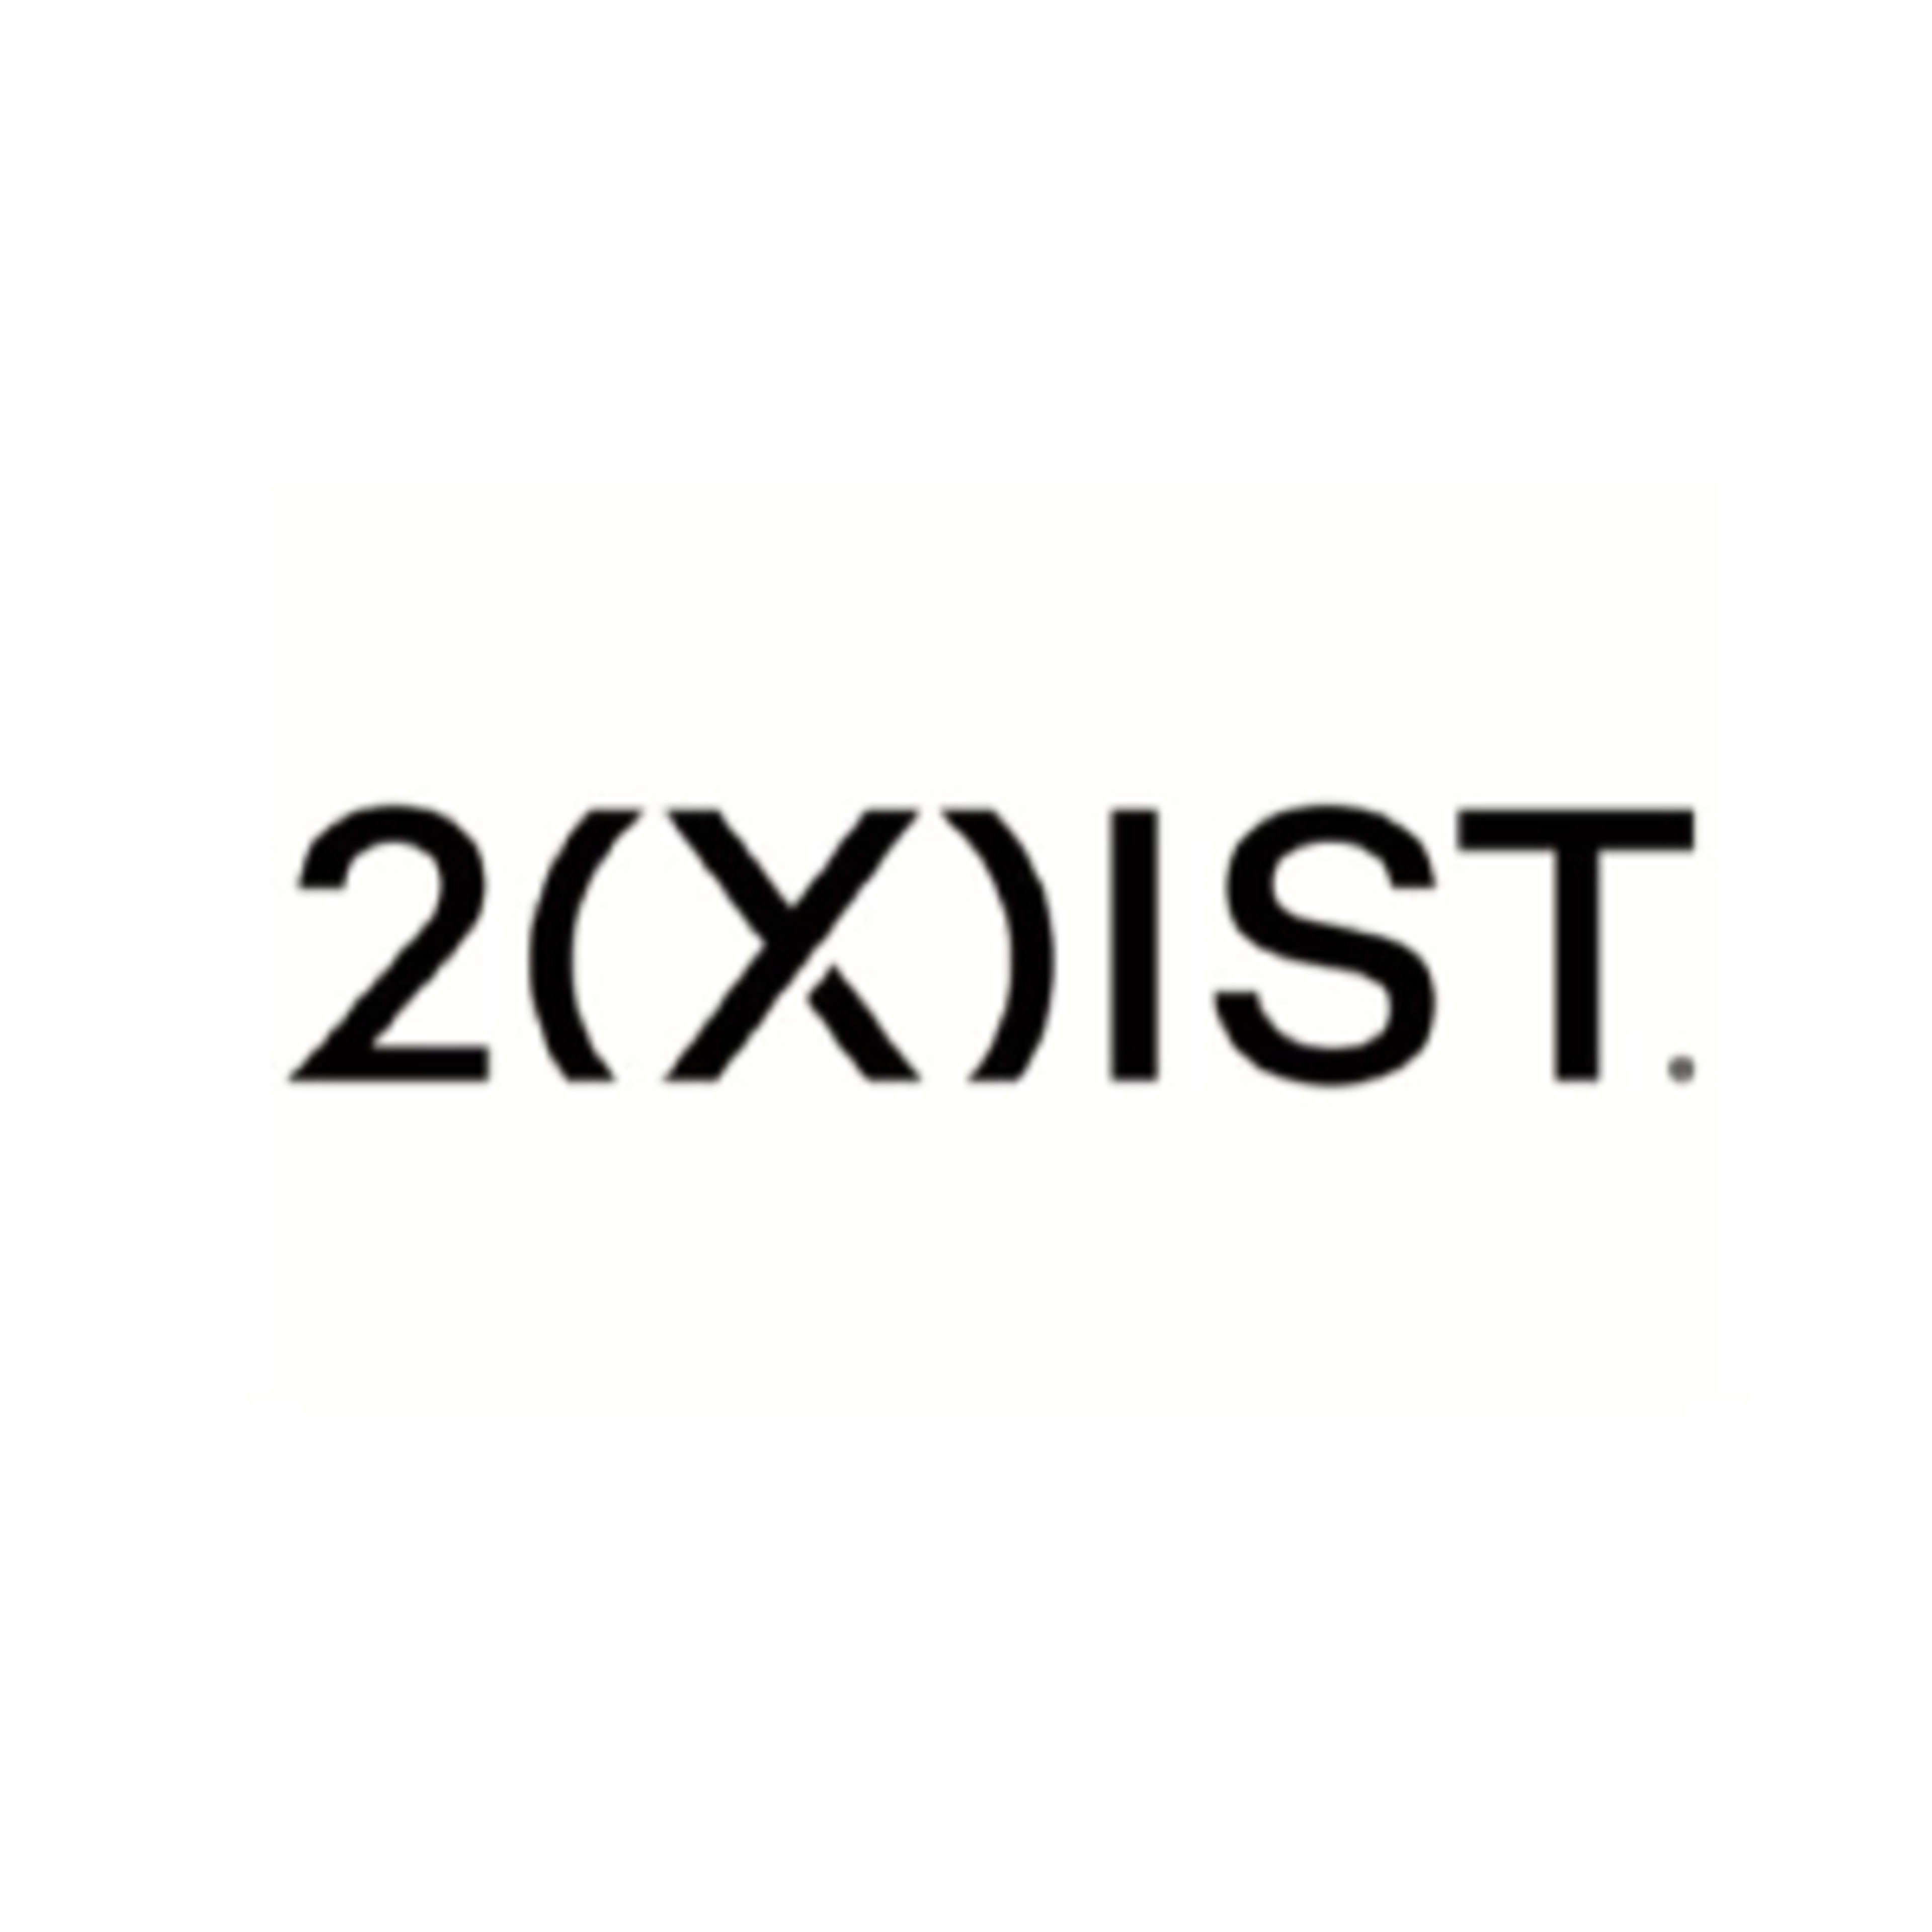 2xist.com Code